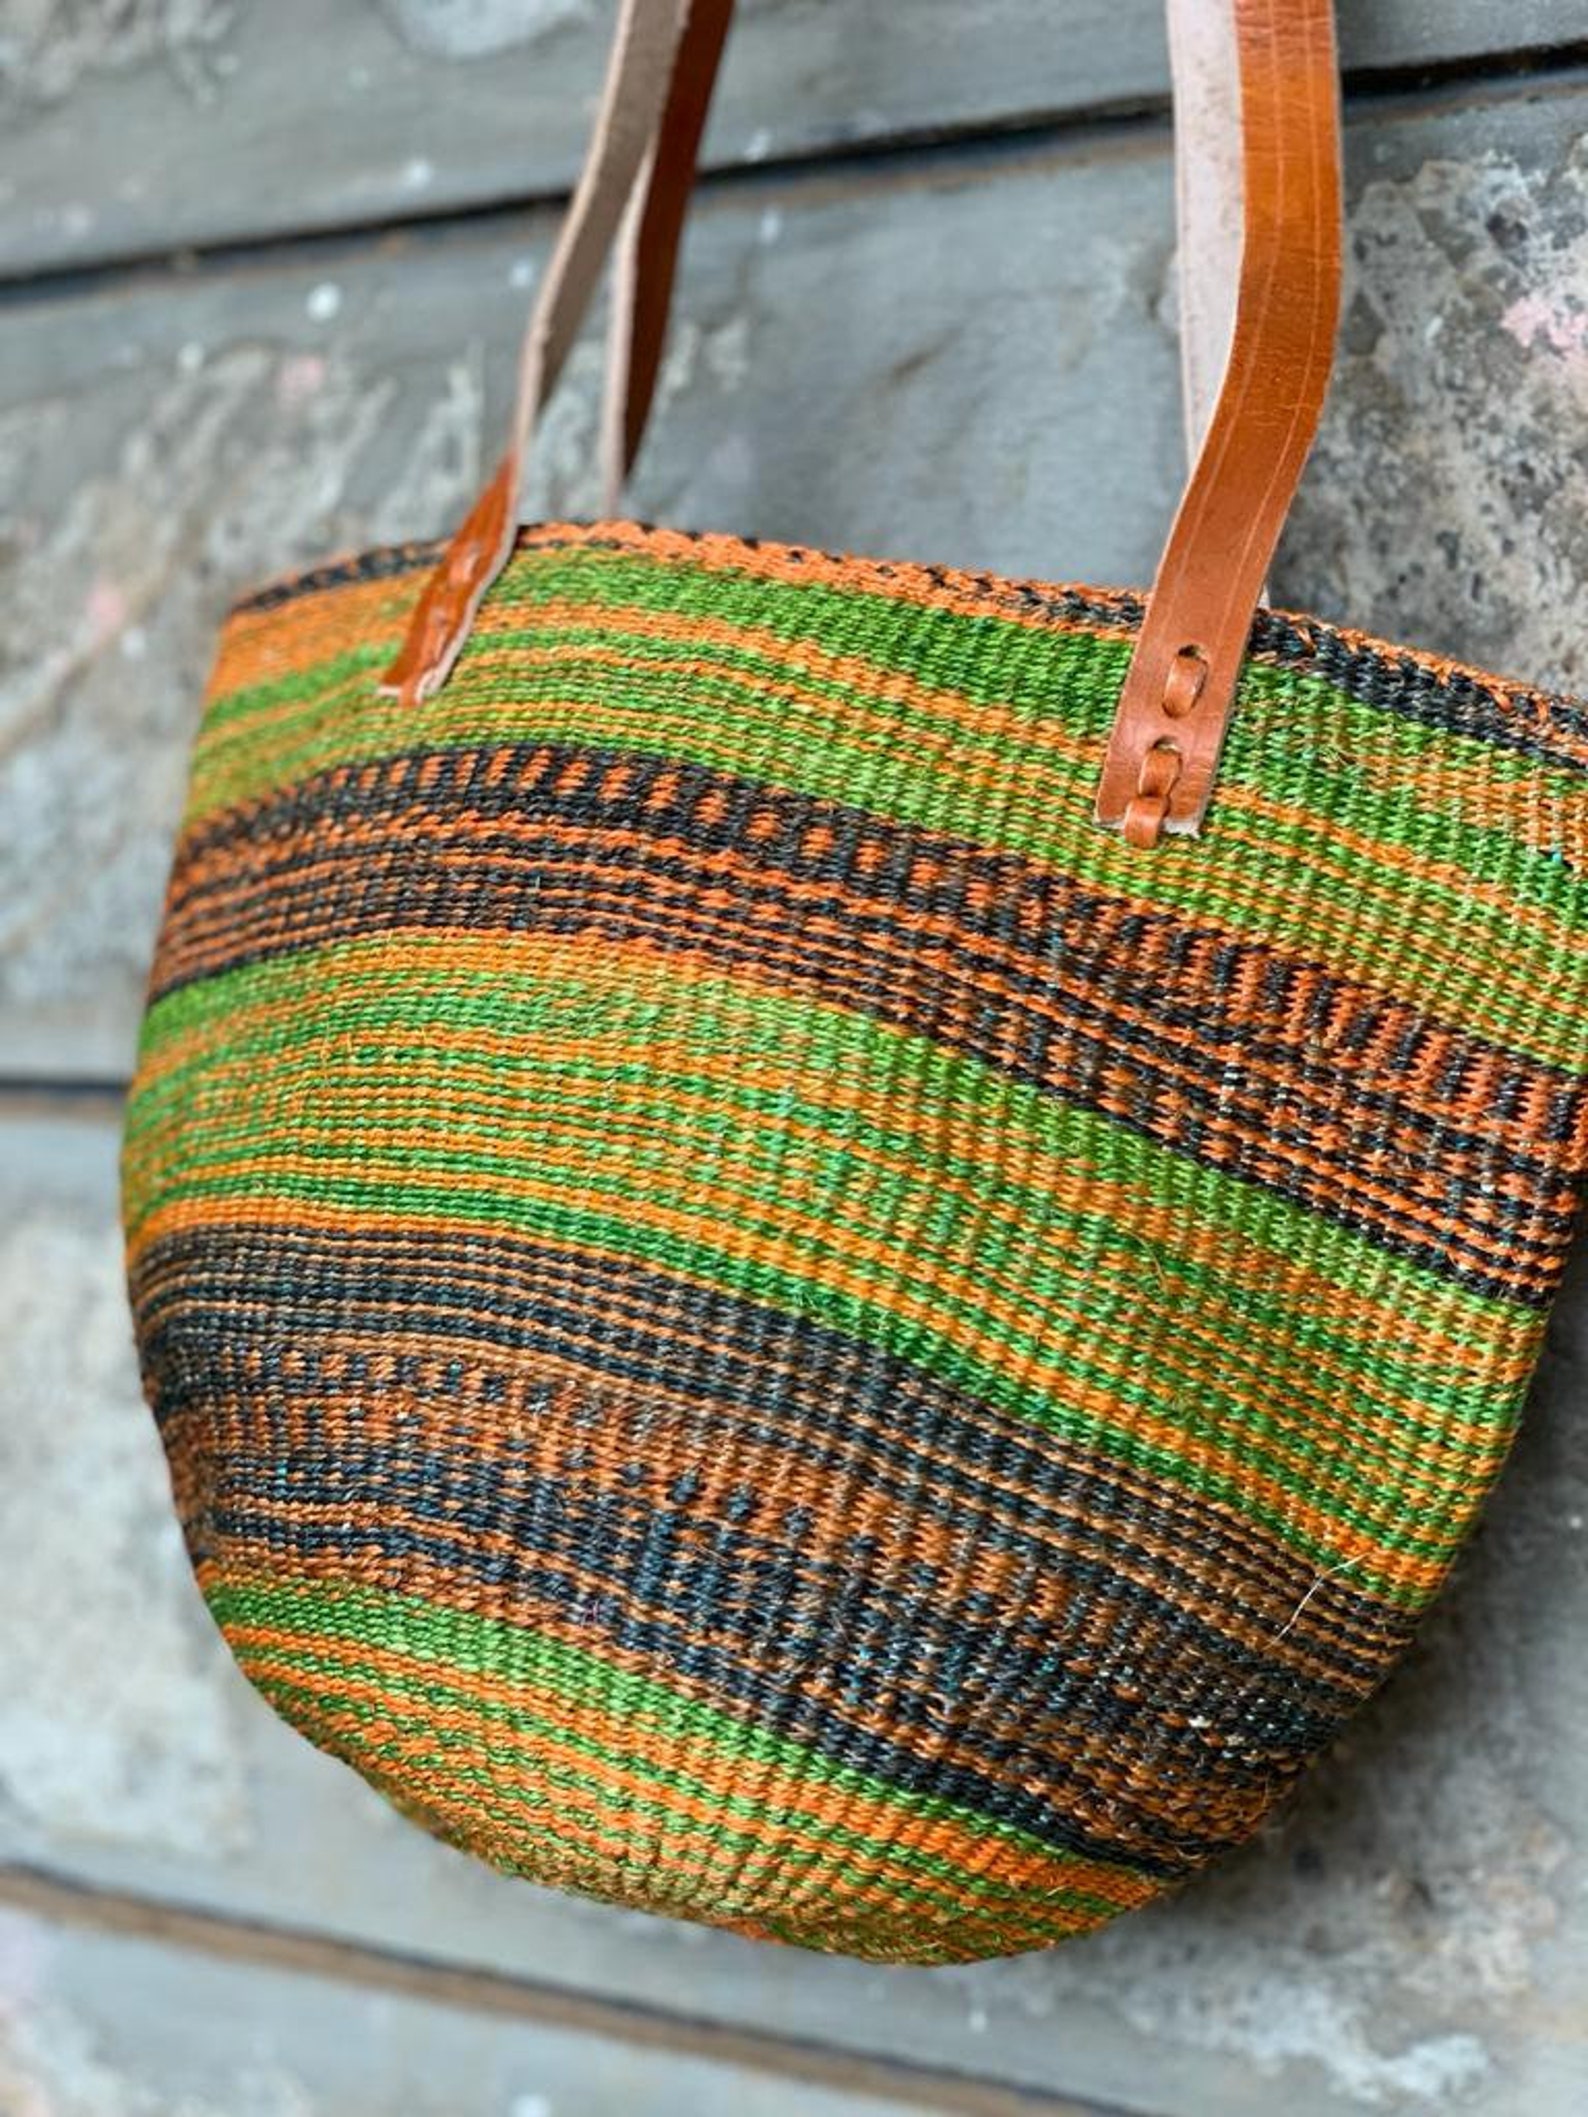 Kiondo Kenyan handbagSisal handbag | Etsy